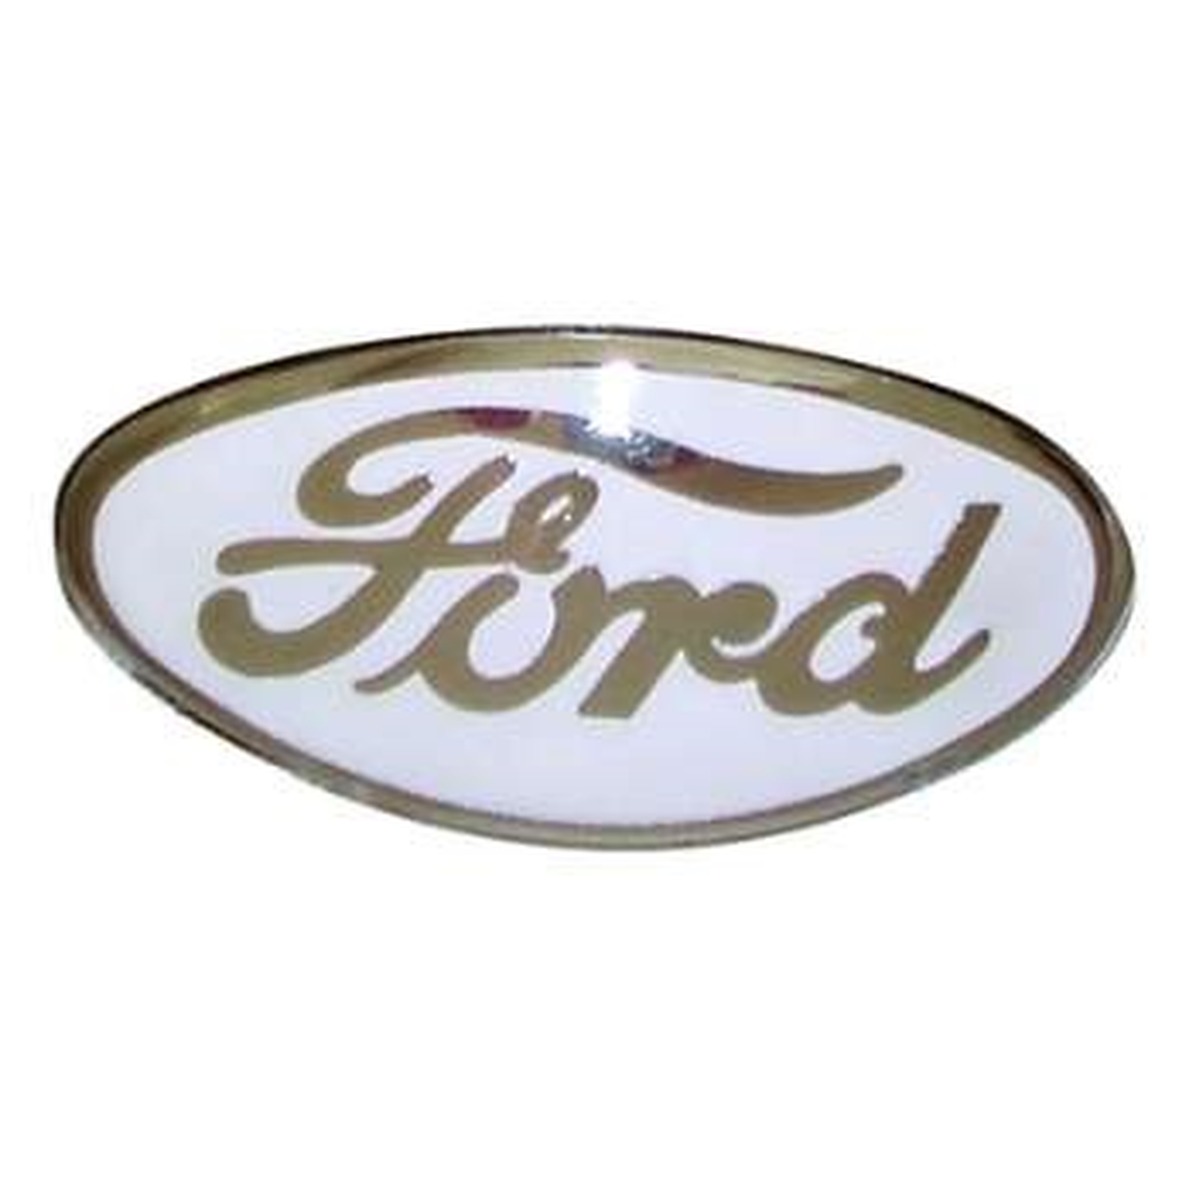 Grill/Radiator Emblems - Ford porcelain grill emblem WHITE 1934 pas